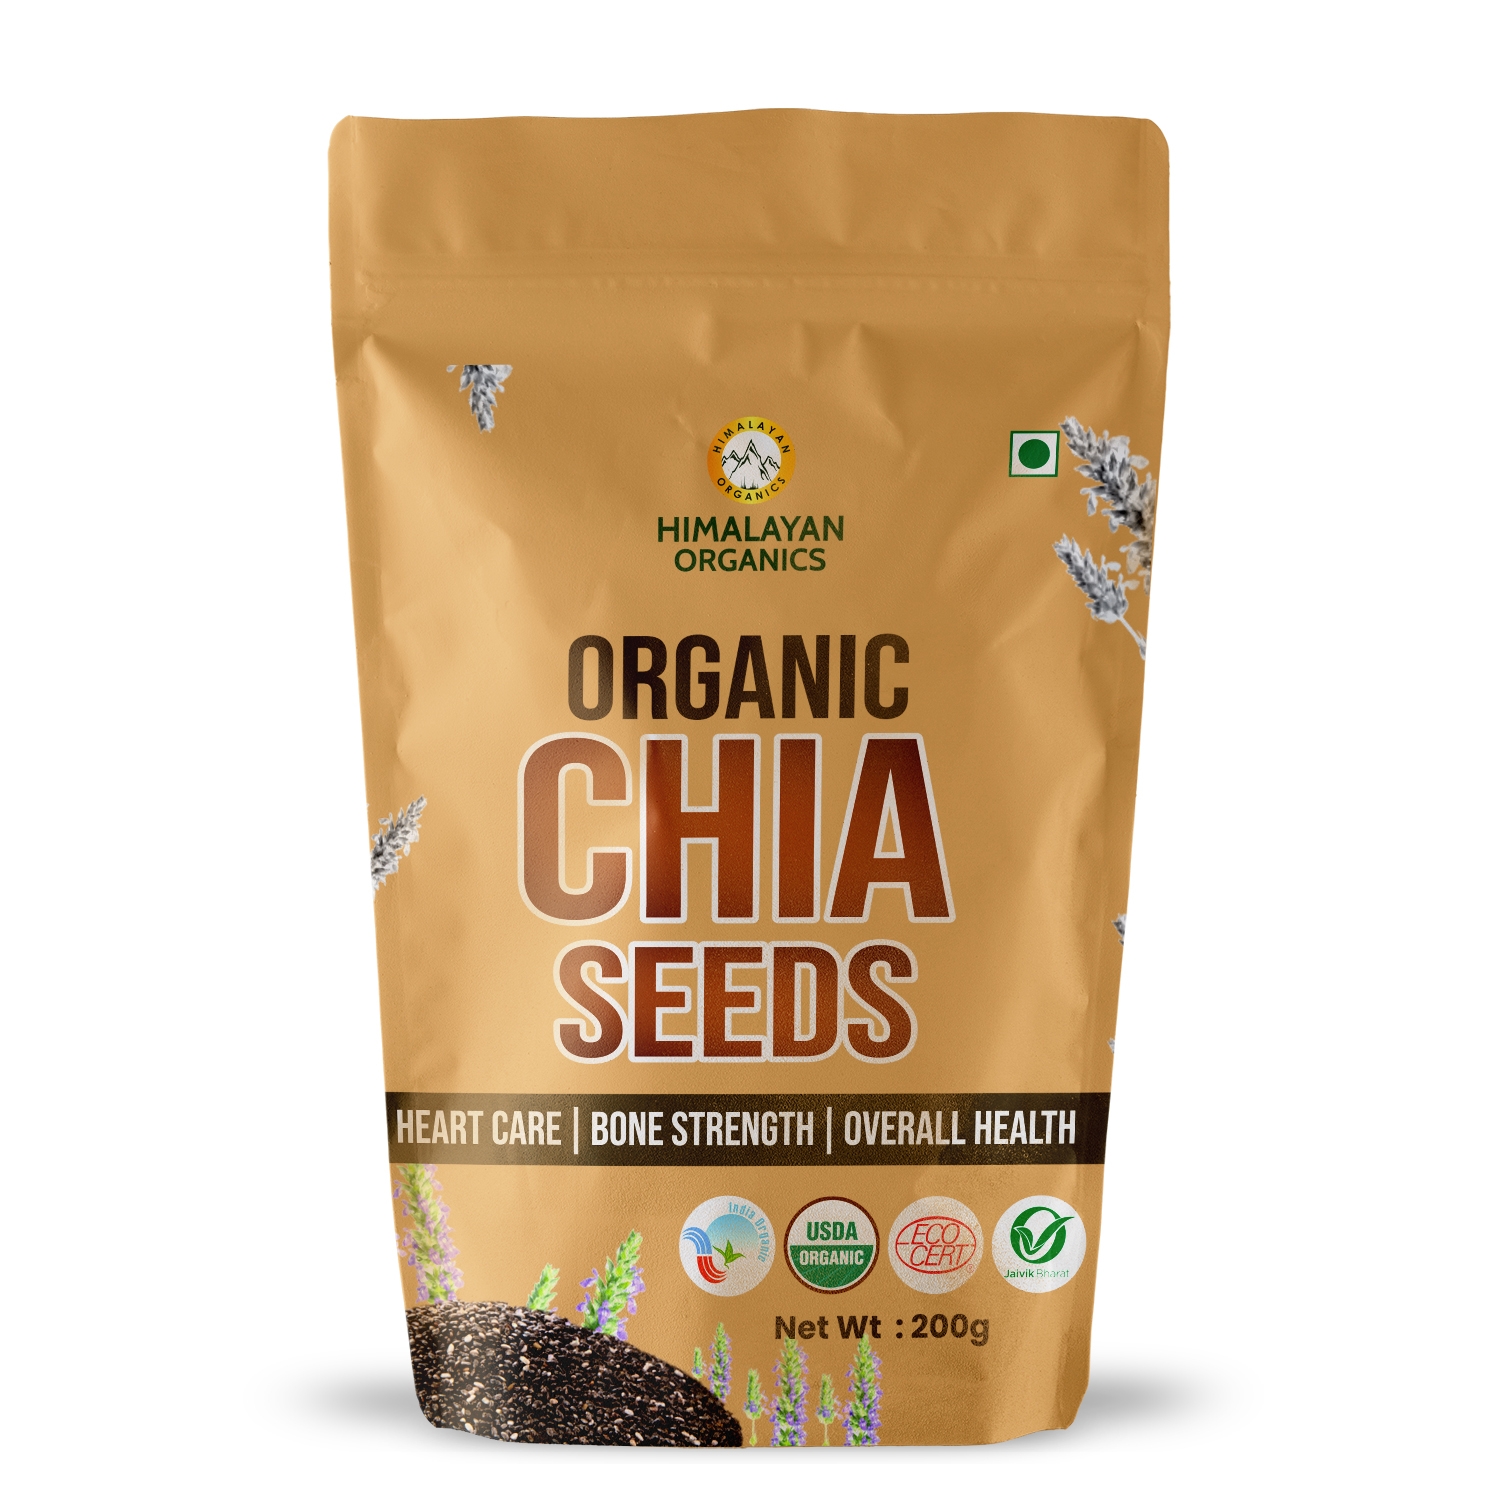 Himalayan Organics | Himalayan Organics Certified Organic Chia Seeds - Enriched with Omega 3 & Zinc Supports Health Management